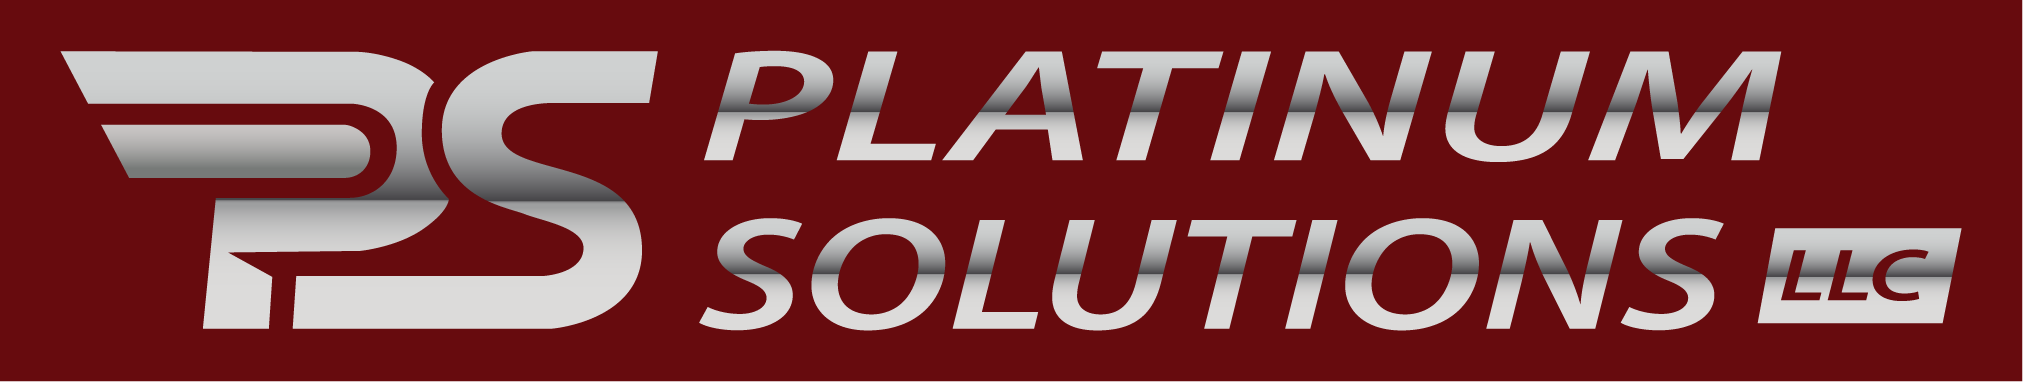 Platinum Solutions, LLC Logo